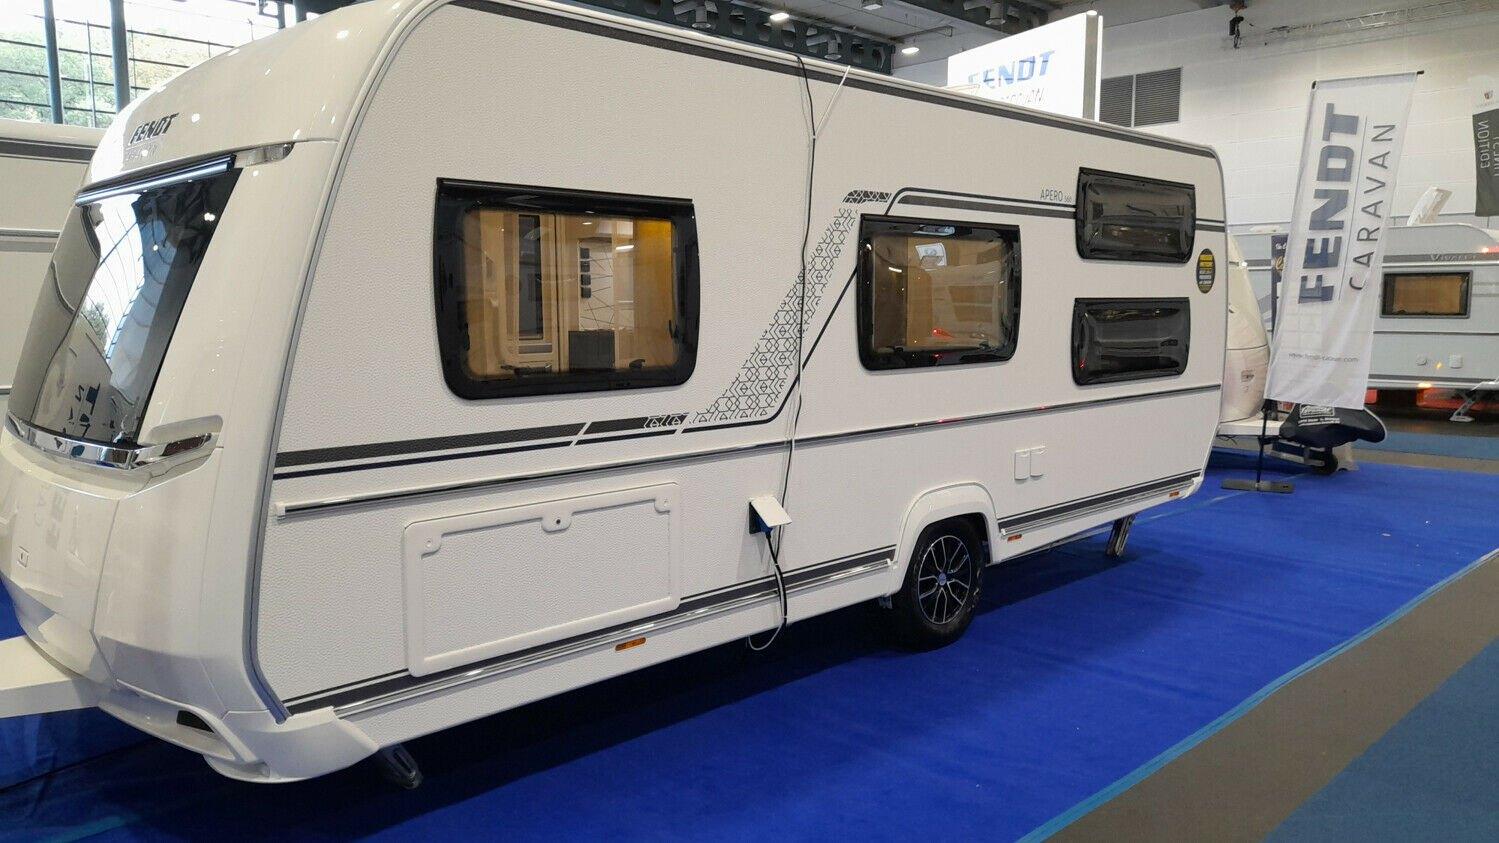 Caravane Wohnwagen Fendt Apero 560 SKM neuf à vendre, ID: 6704845